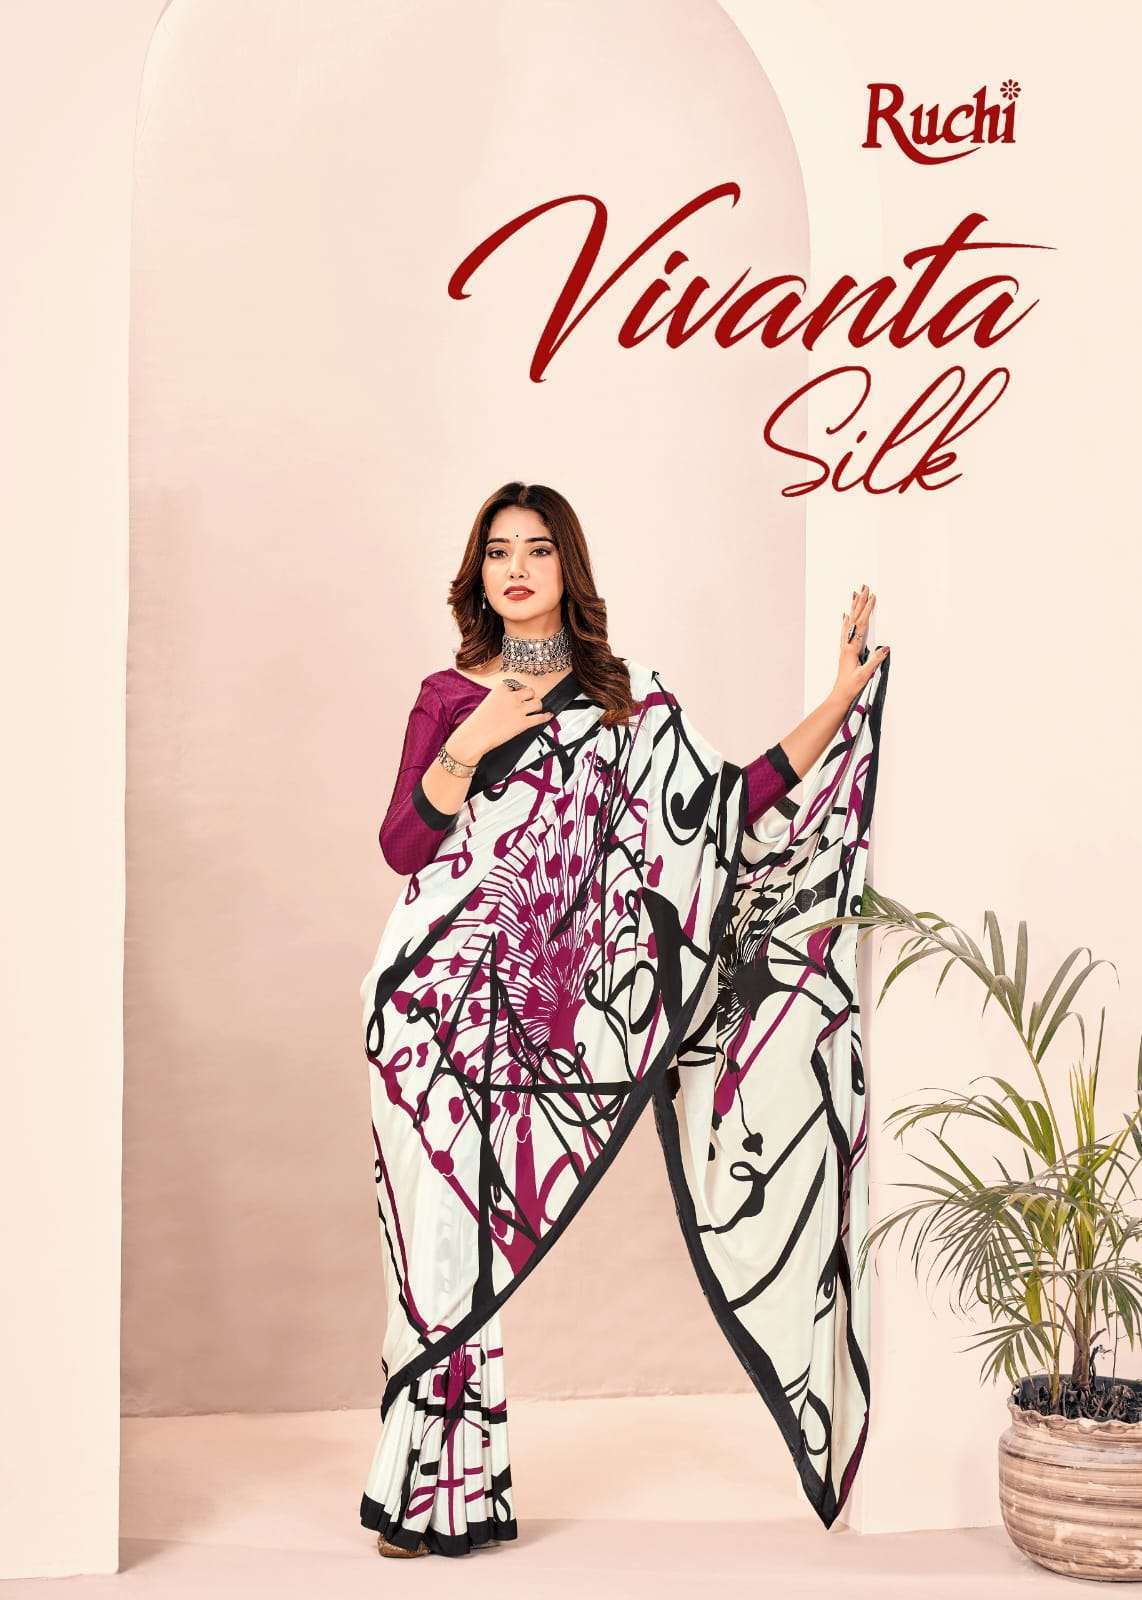 Ruchi Saree Vivanta Silk 28 SILK CREAP WITH PRINTED WHITE SHADES SUMMER SPECIAL SAREE COLLECITON AT BEST RATE